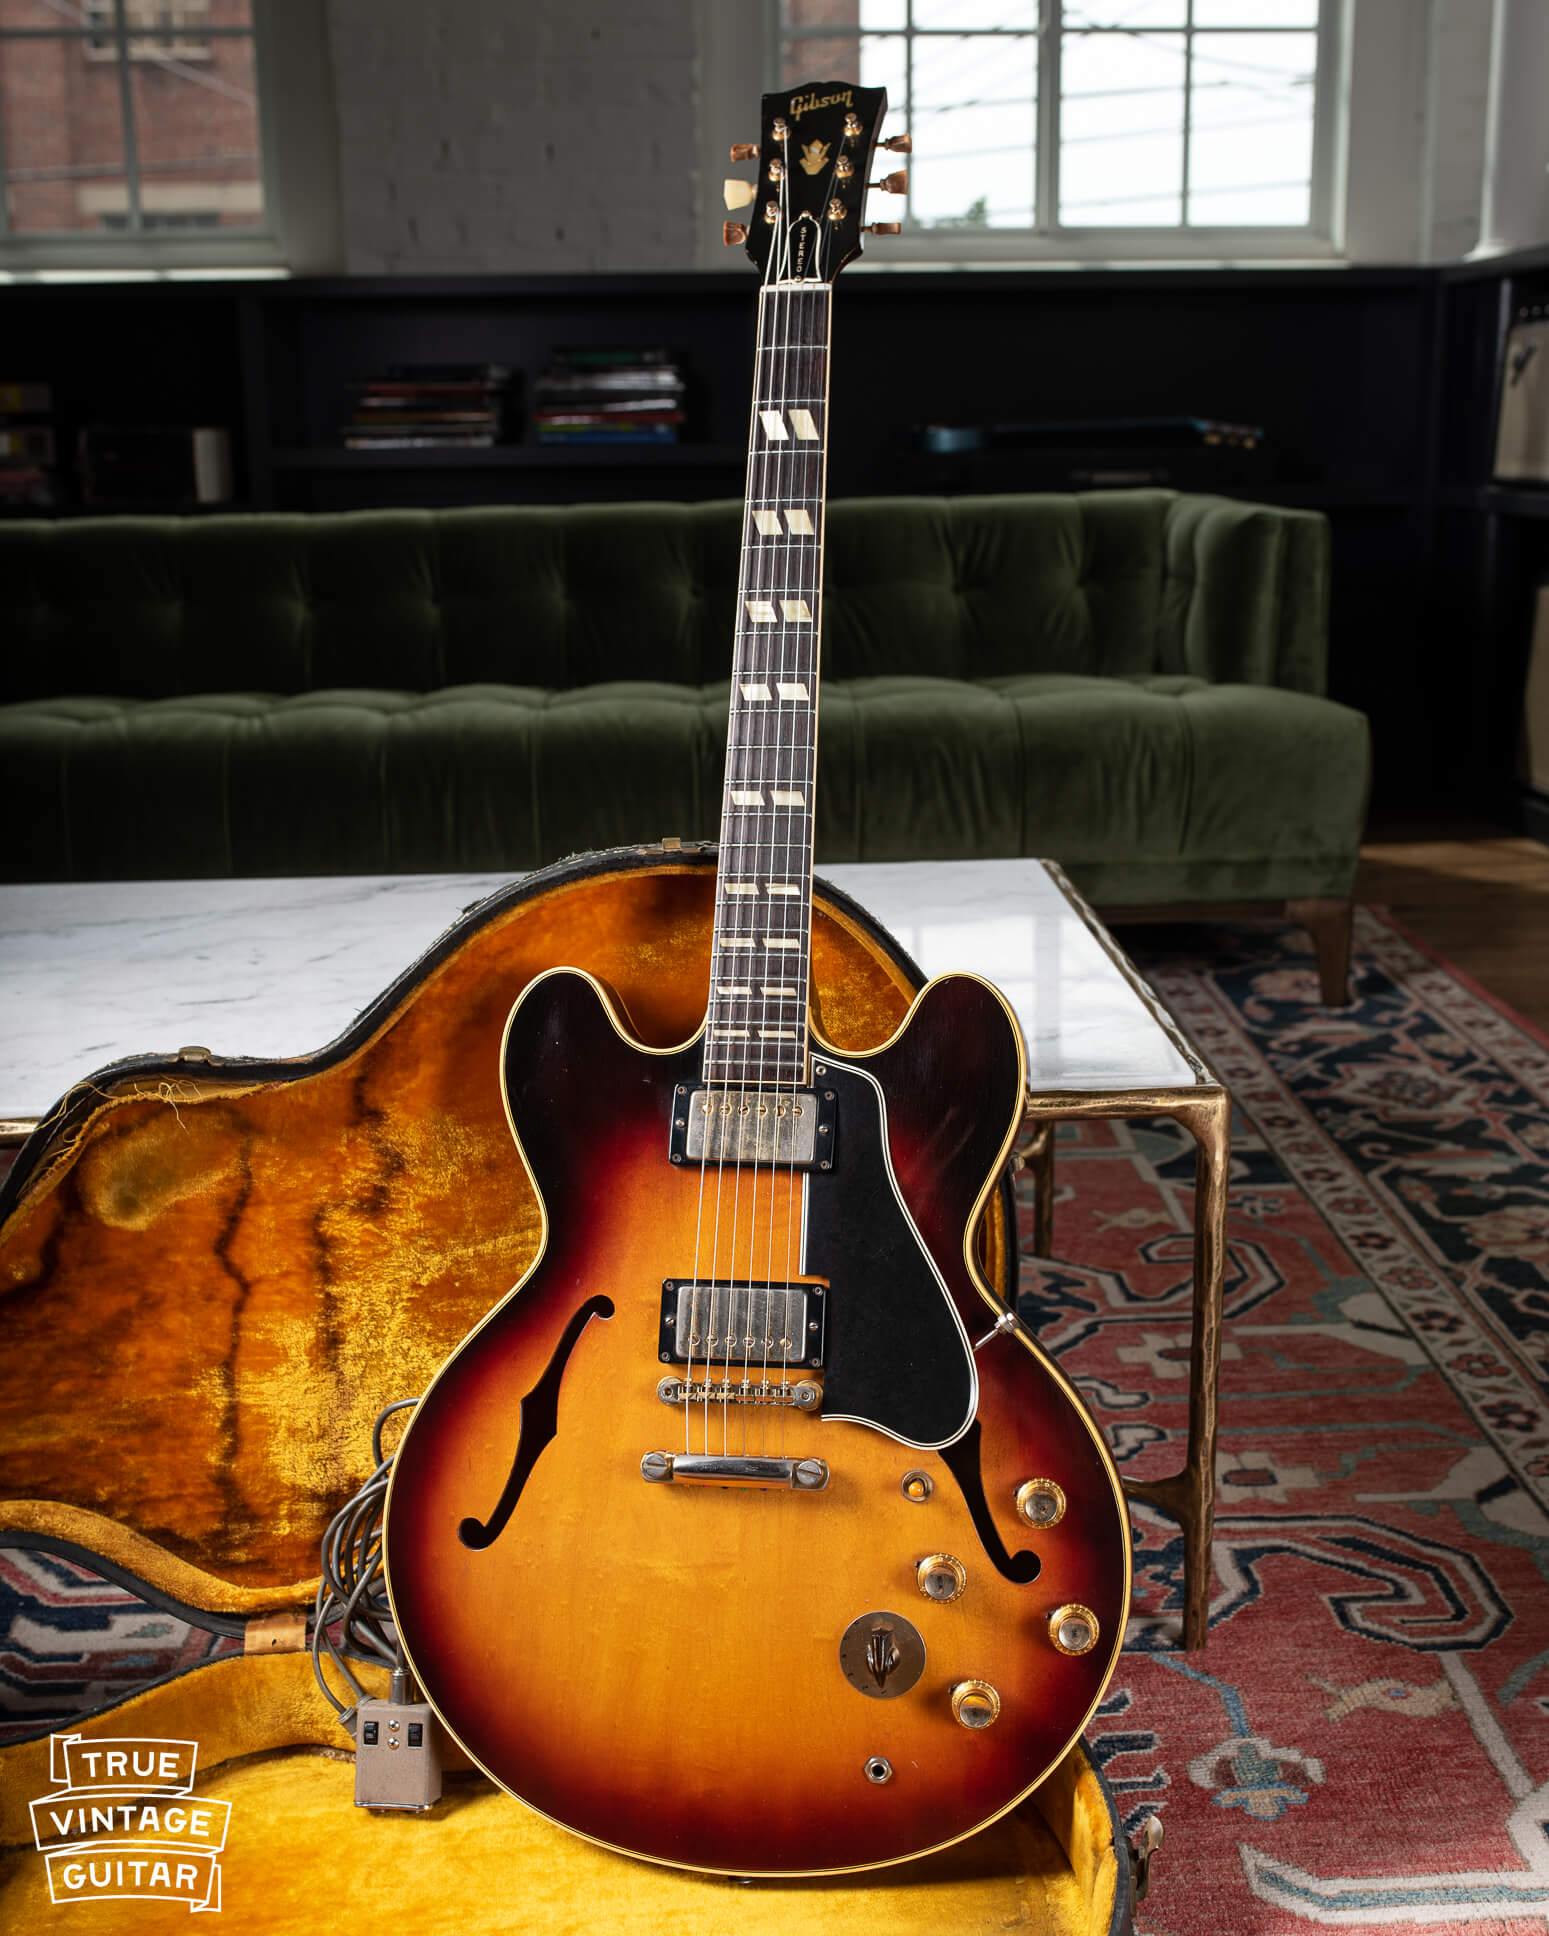 Gibson ES-345 guitar made in 1960 in Sunburst finish